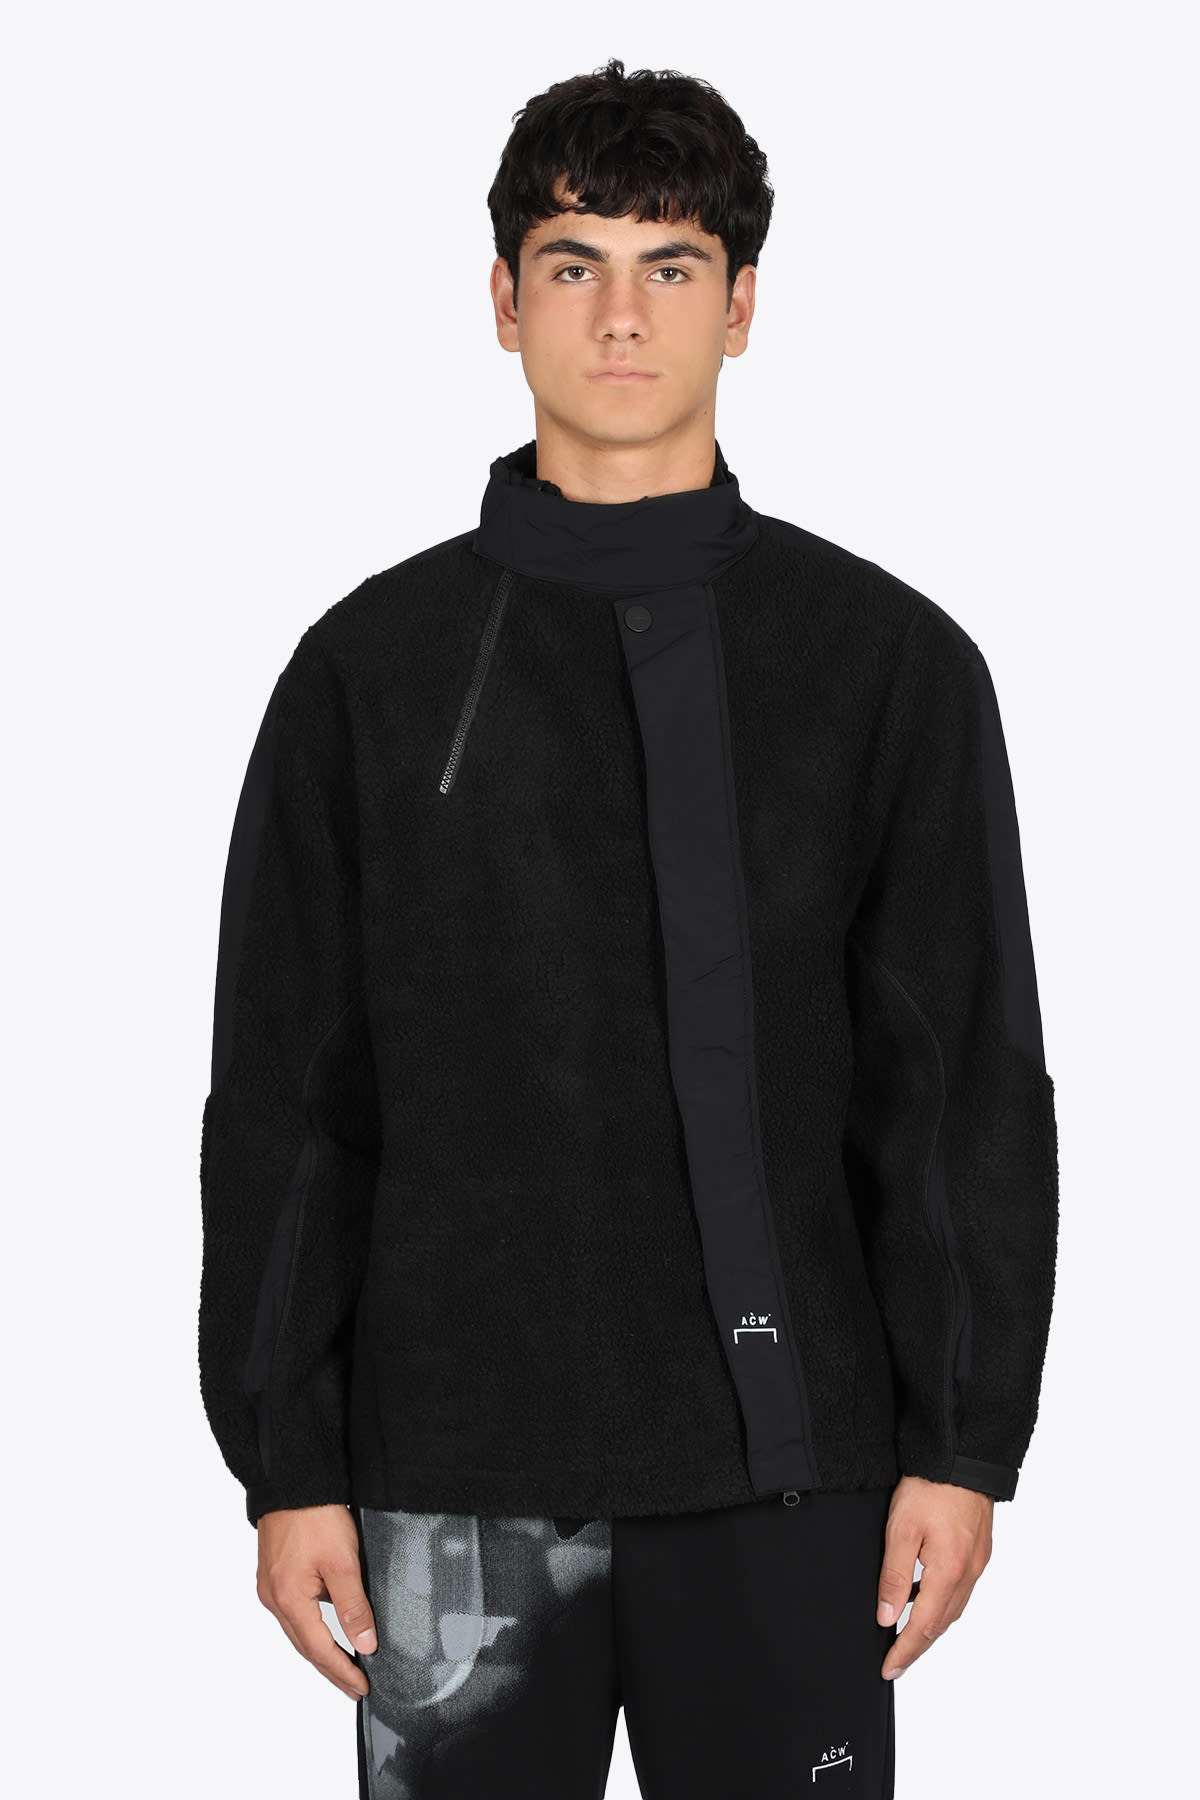 A-COLD-WALL Bias Fleese Jacket Black fleece jacket with logo print